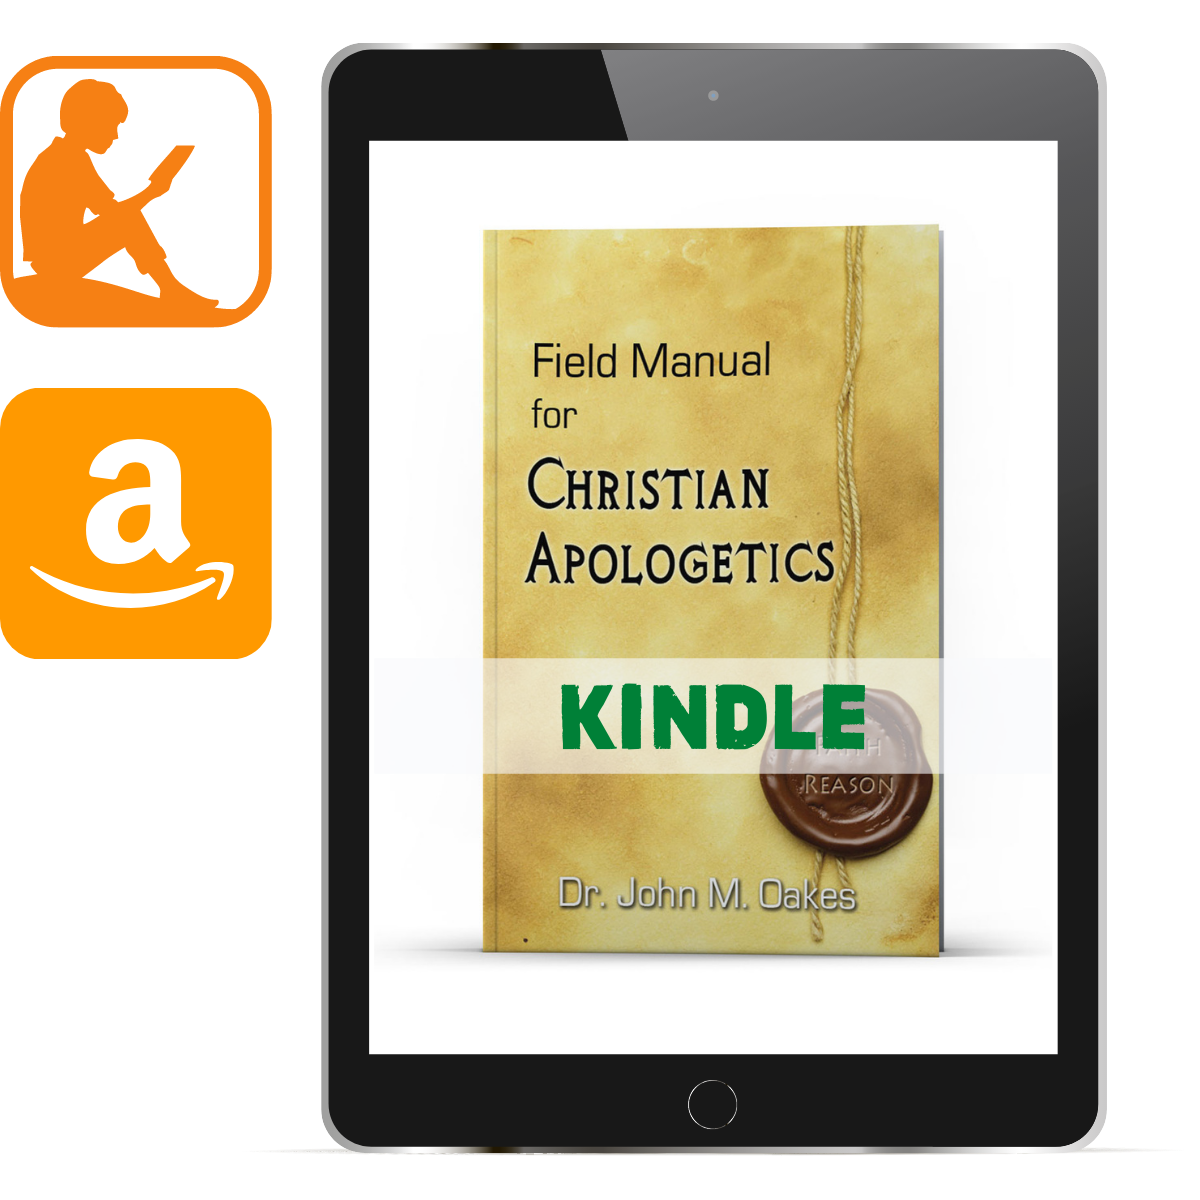 Field Manual for Christian Apologetics (Kindle) - Illumination Publishers